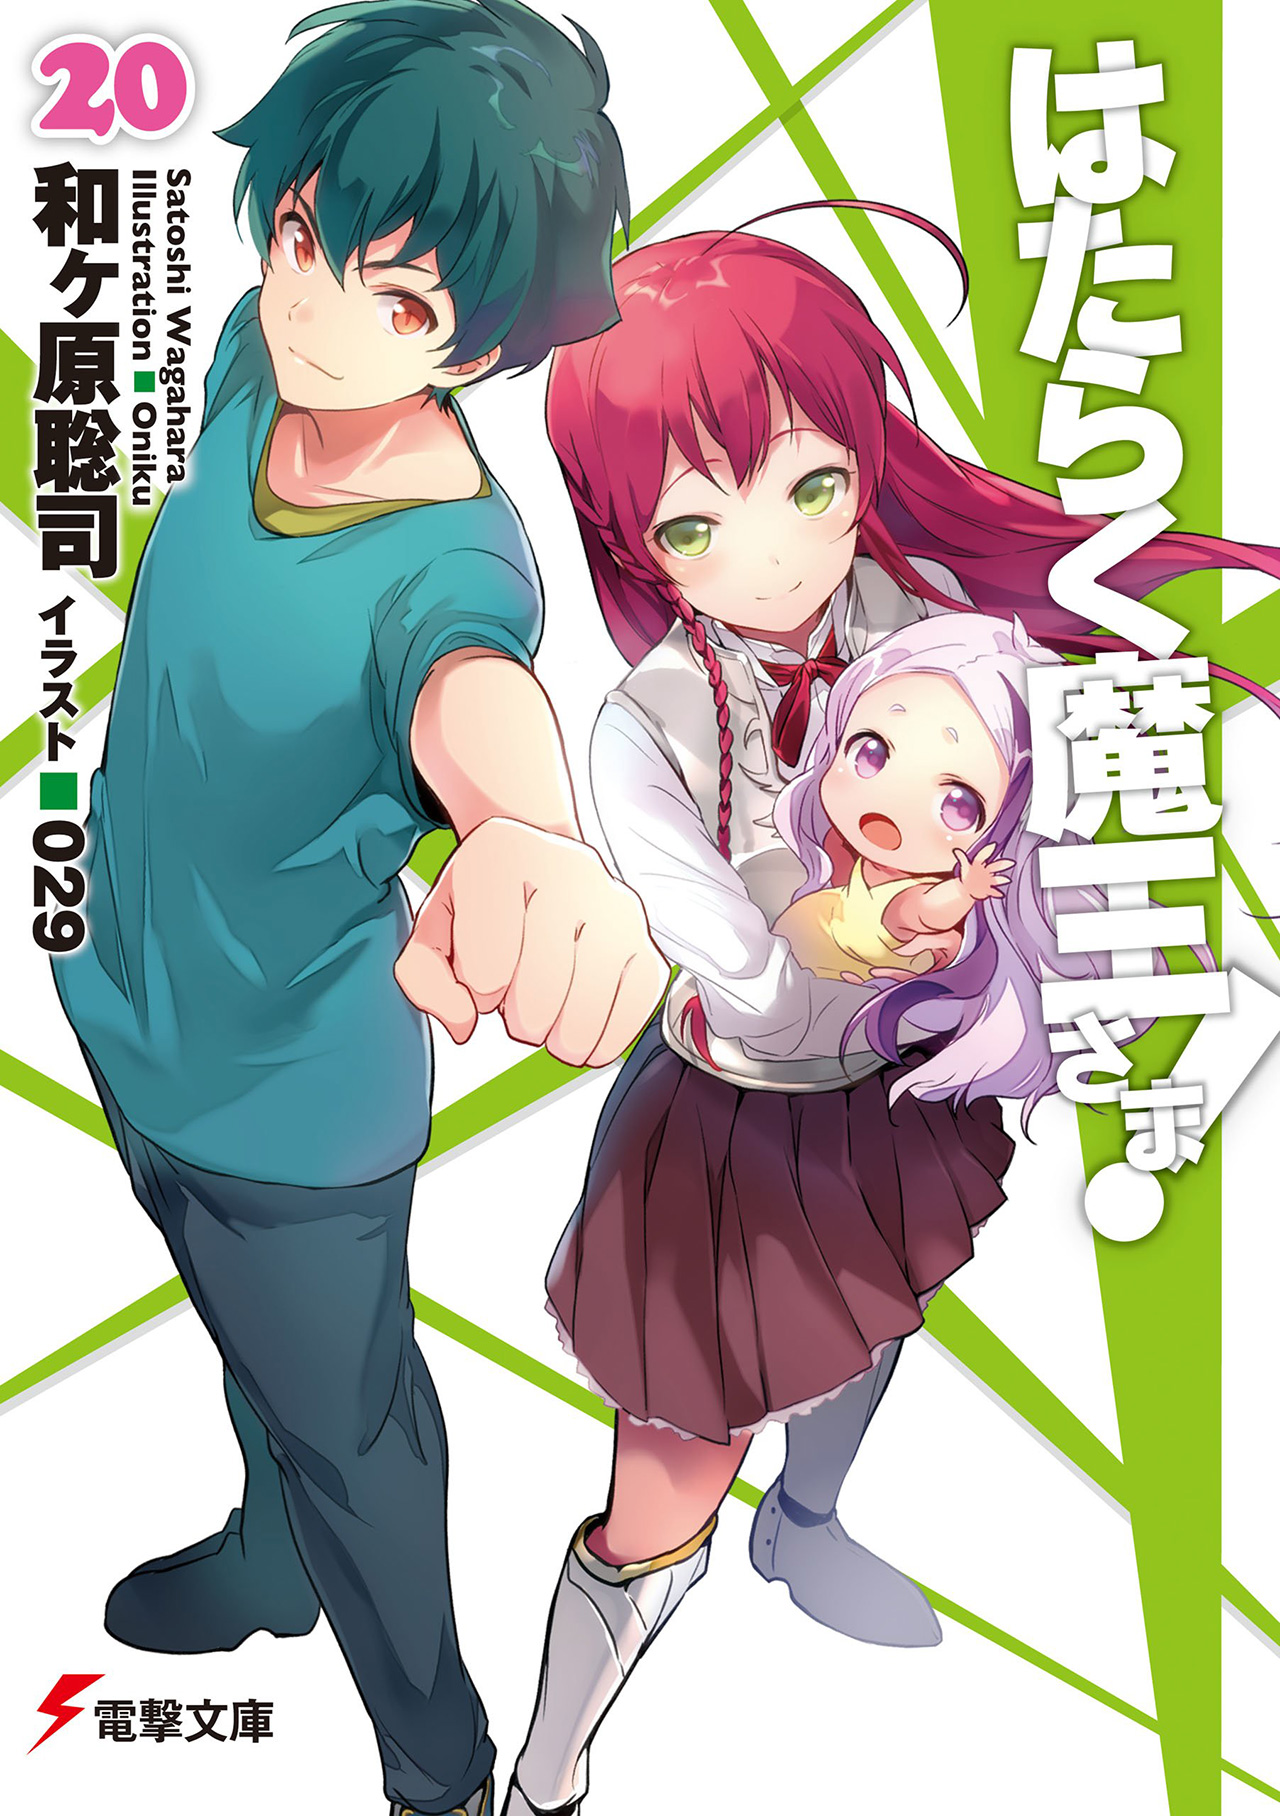 Anime DVD Hataraku Maou-sama! (The Devil is a Part-Timer) Season 1